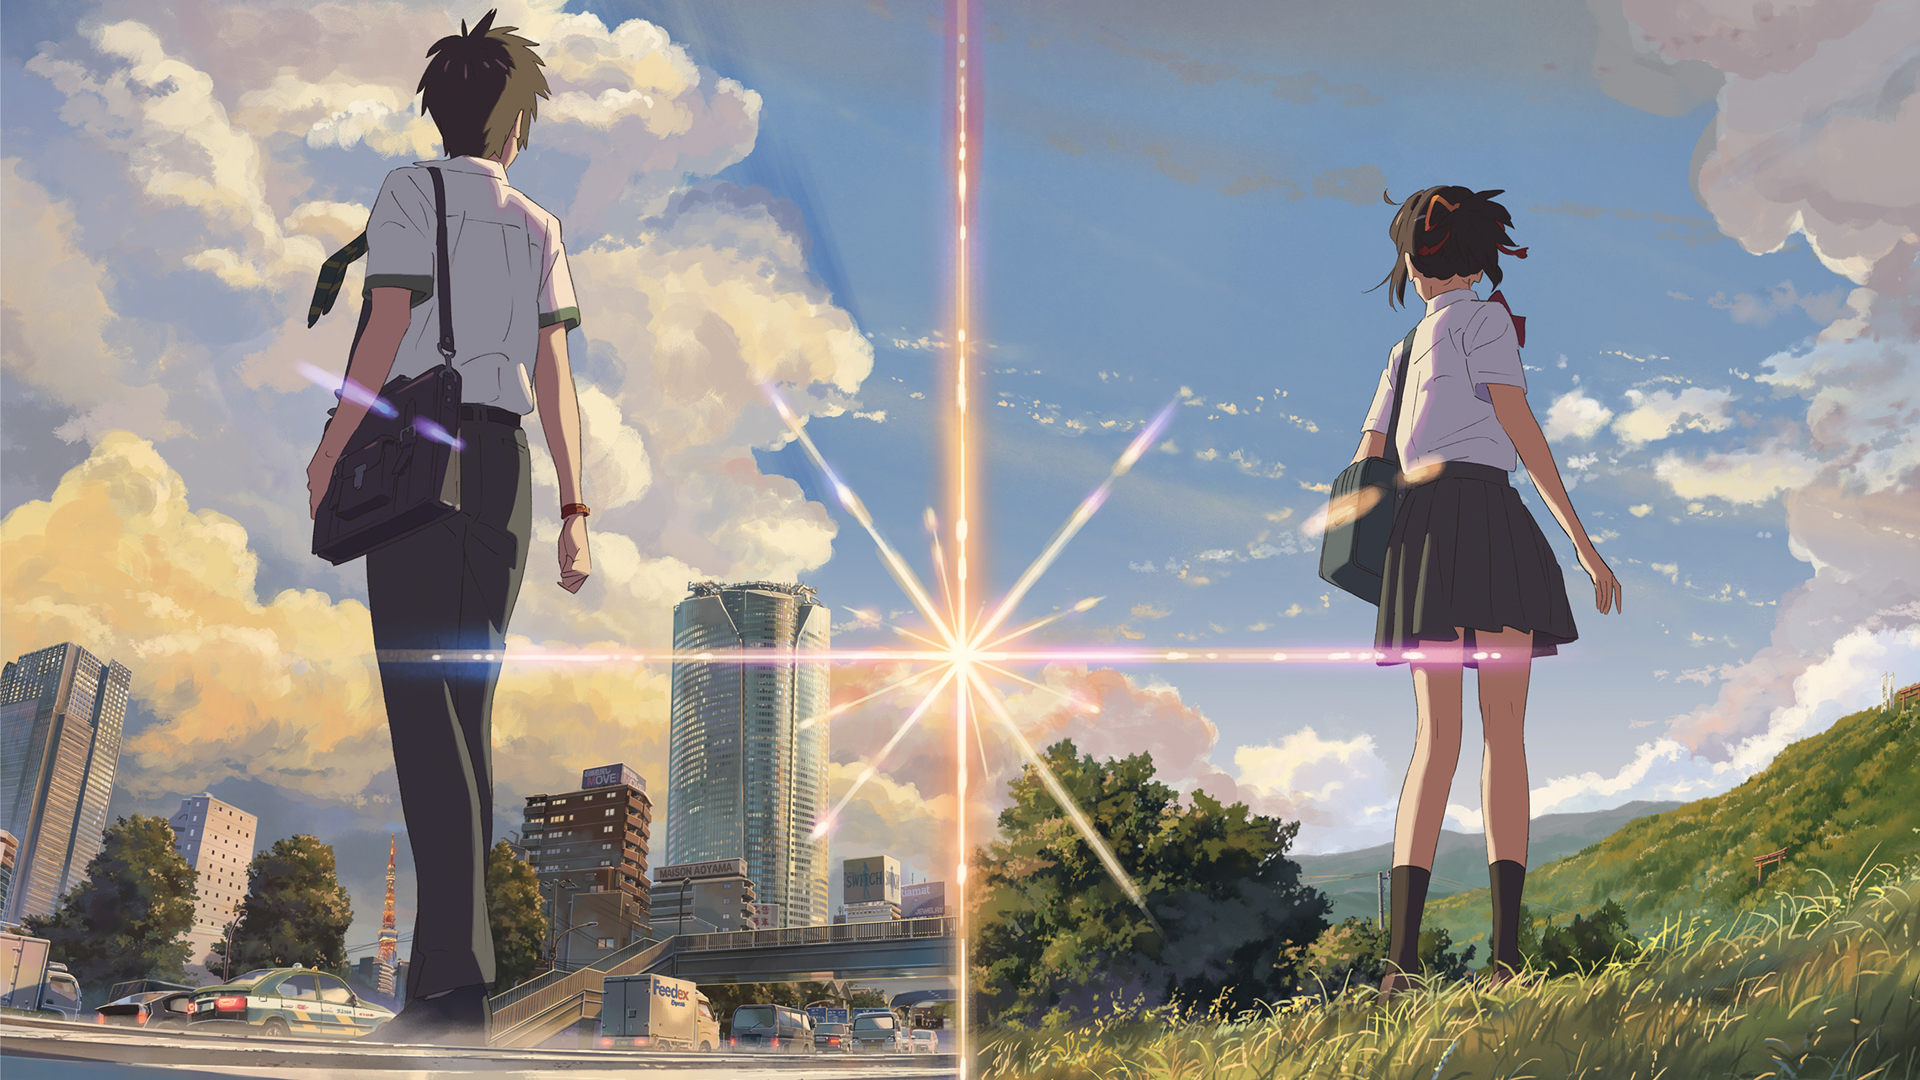 Taki and Mitsuha (Your Name) by Makoto Shinkai